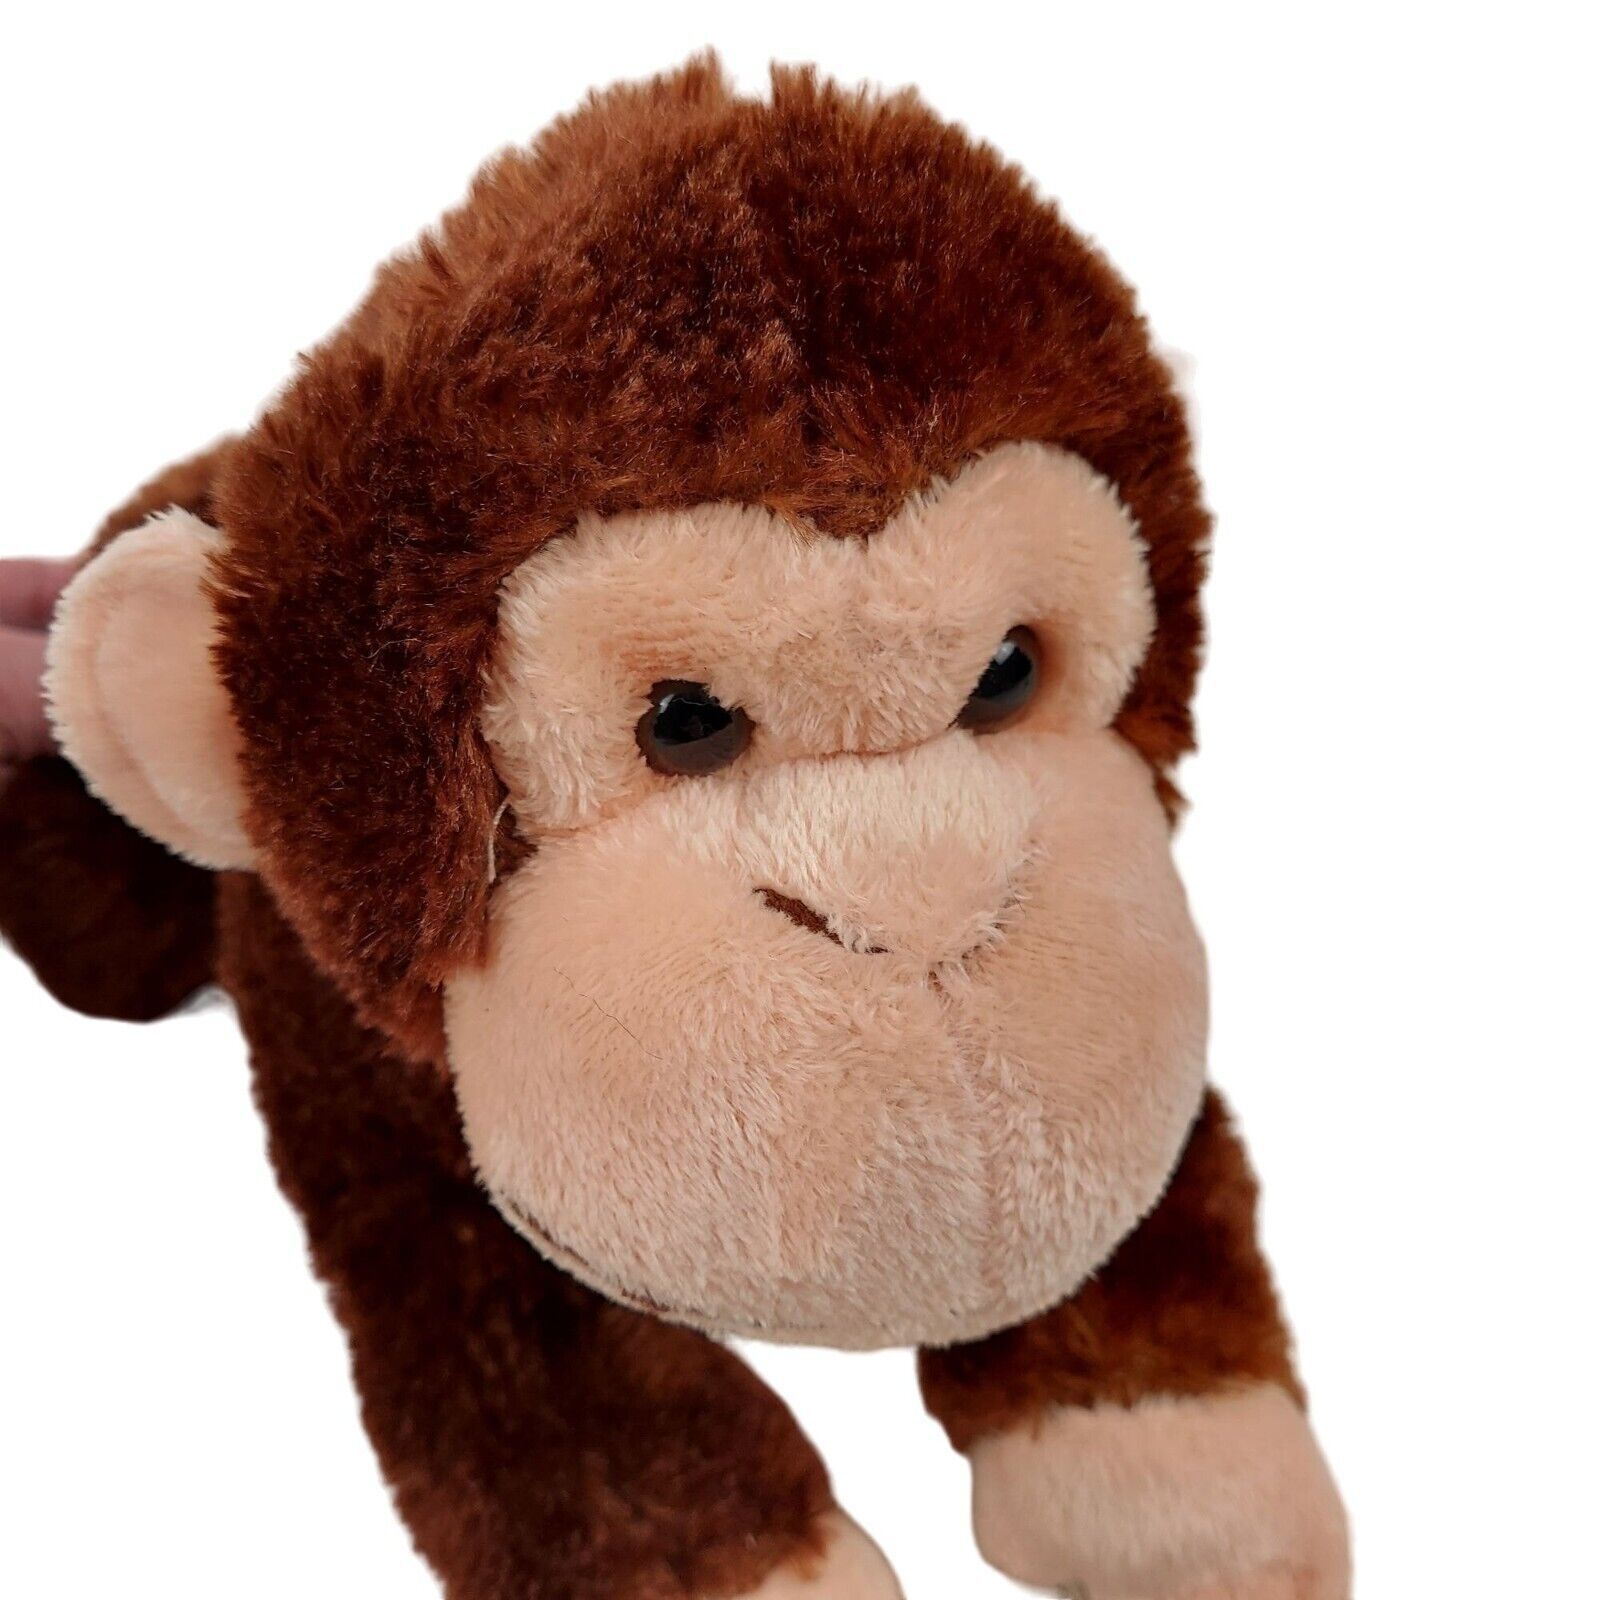 Primary image for Aurora World Stuffed Animal Plush Chimpanzee Monkey Brown Fuzzy Toy